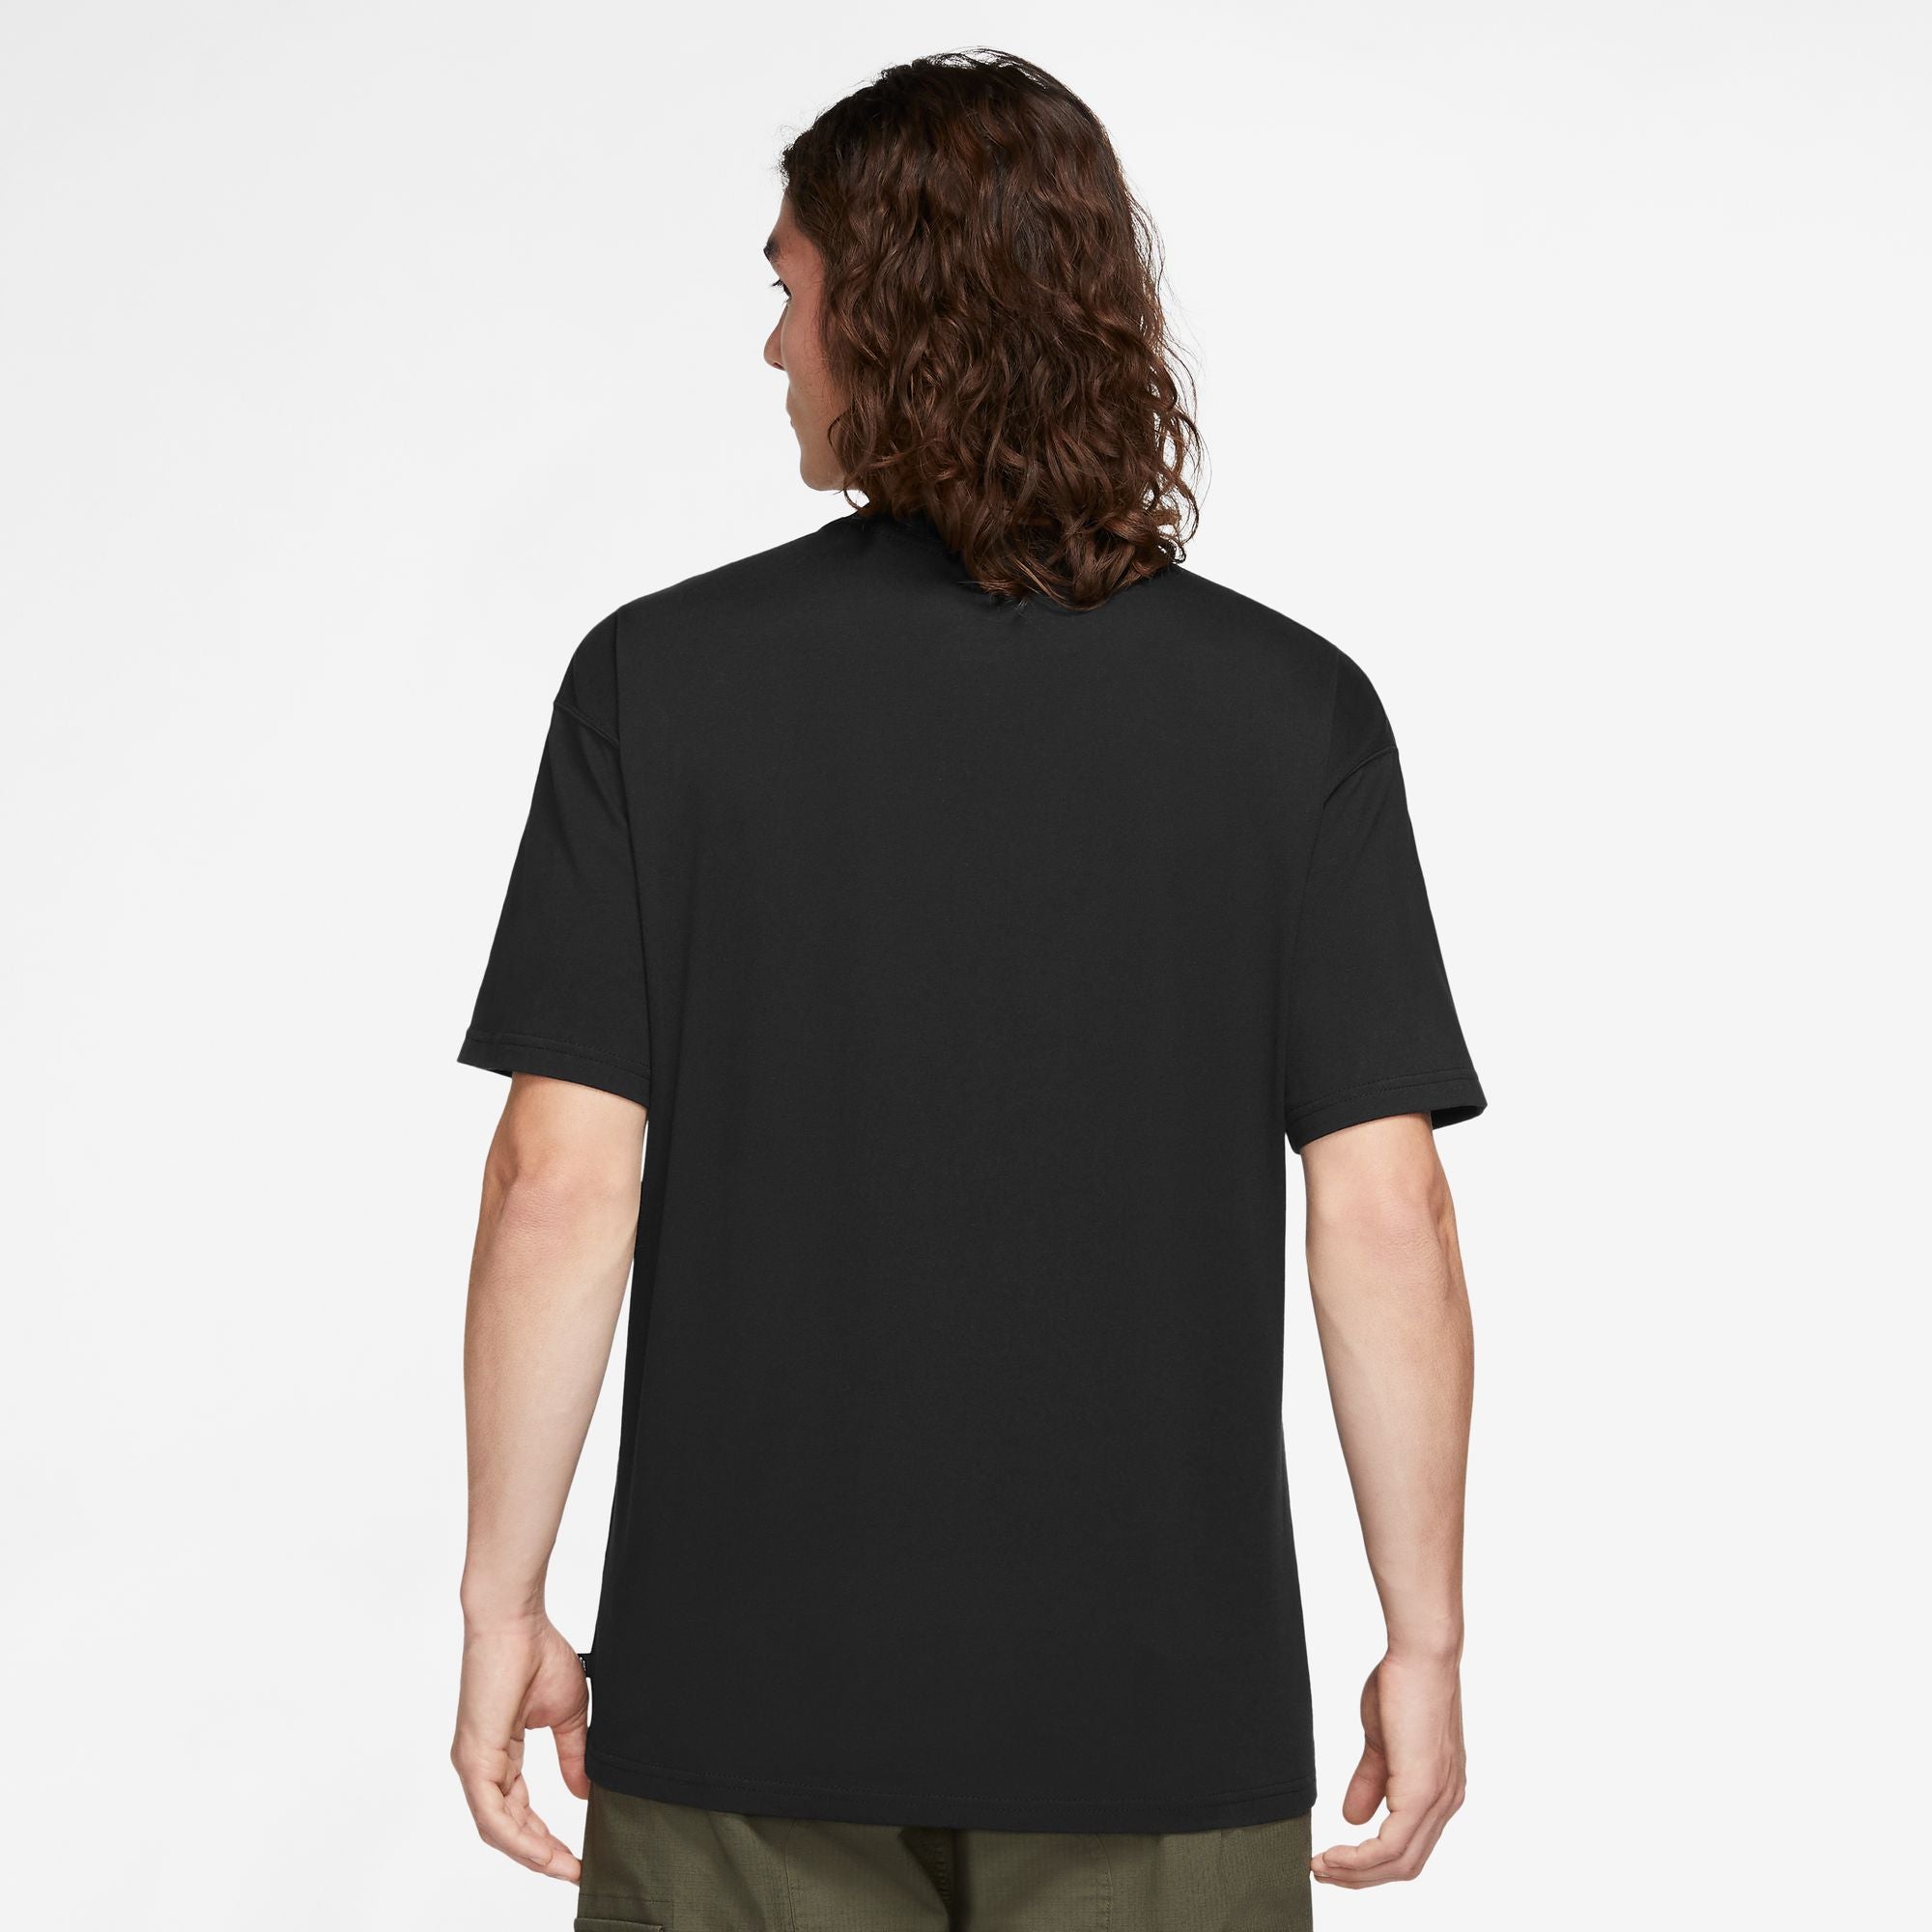 Nike SB Dunkteam T-shirt - Black